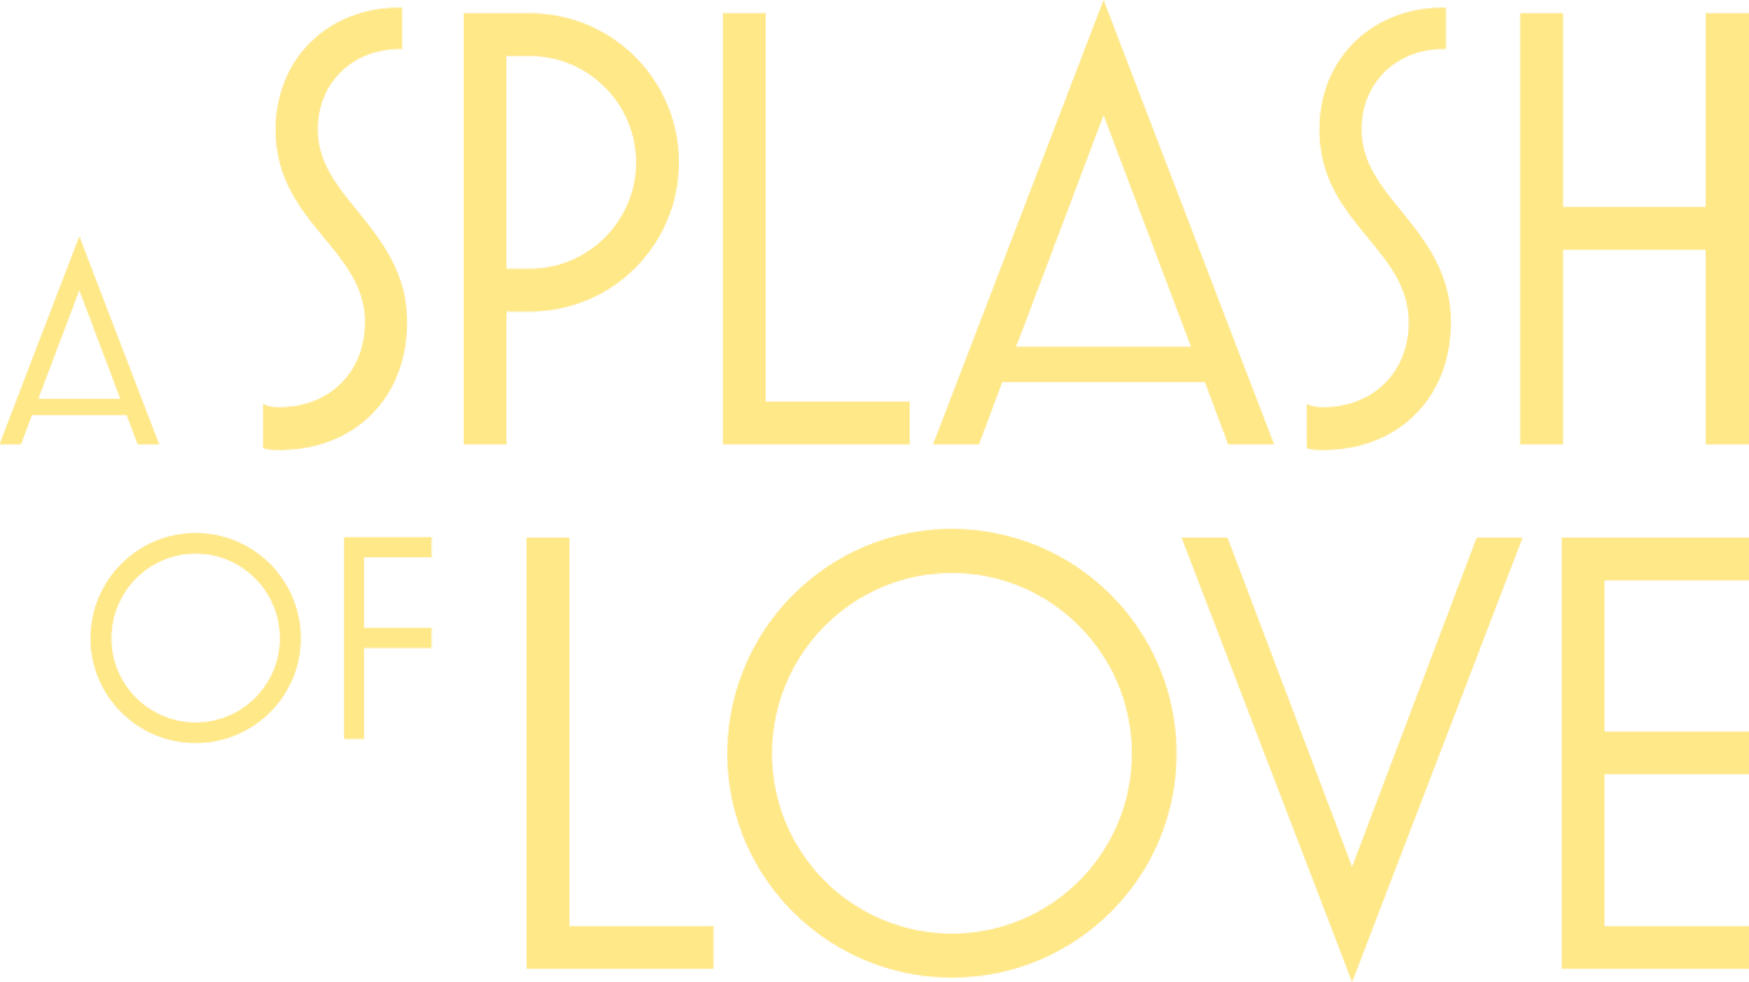 A Splash of Love logo